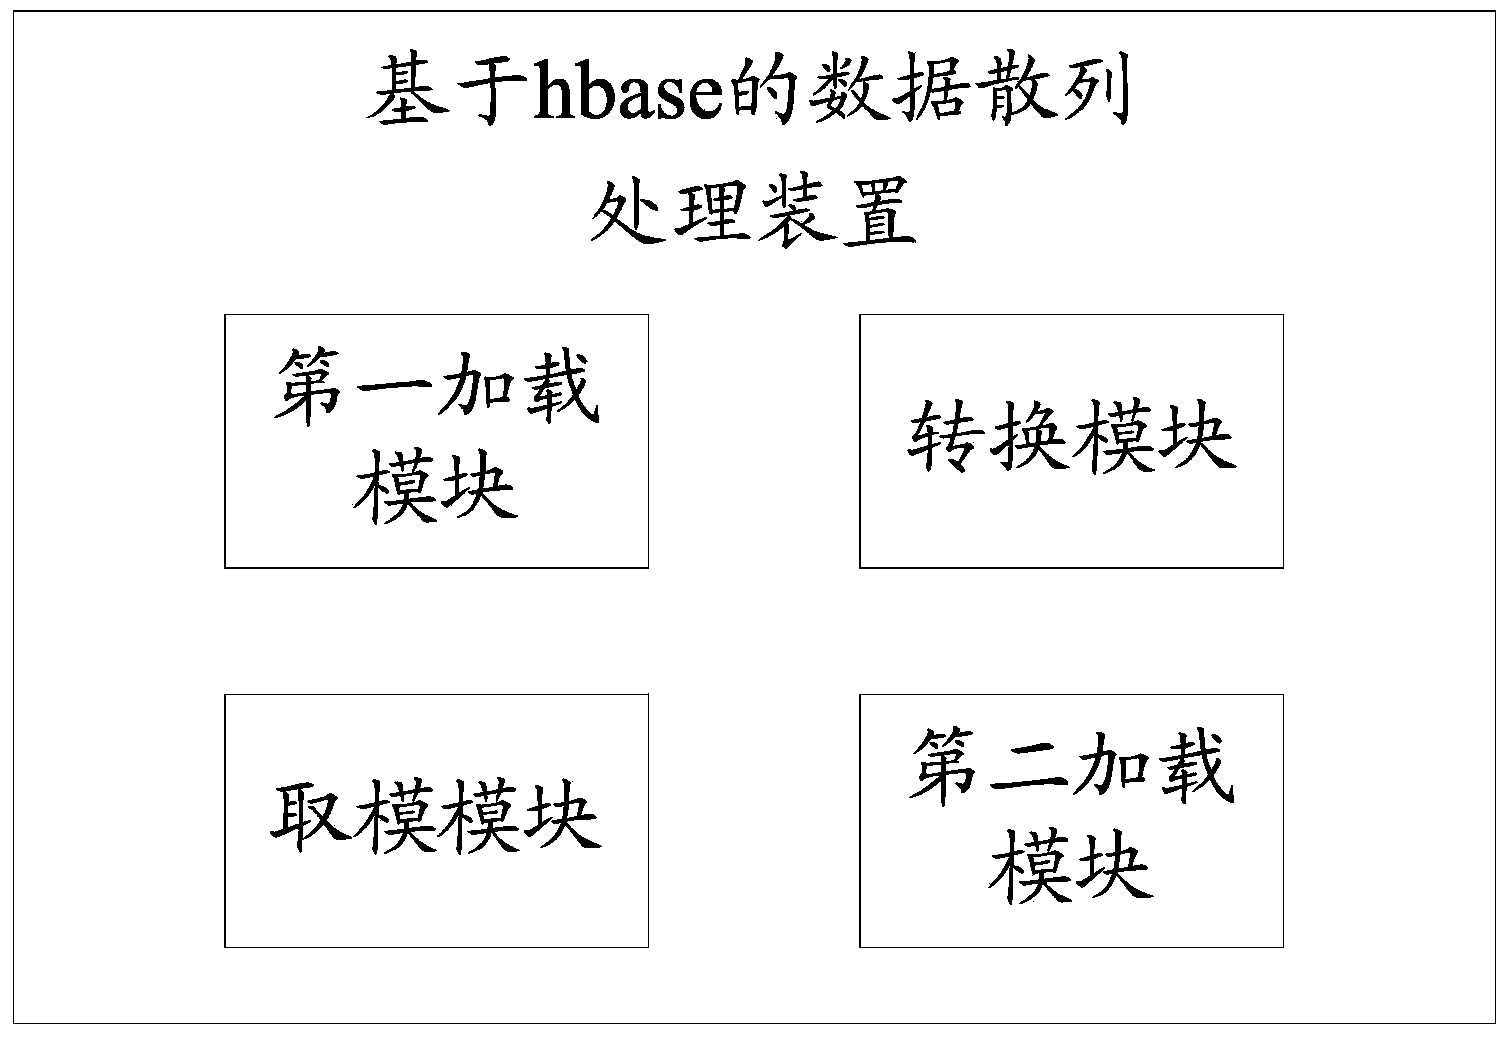 Hbase-based data hash processing method and device